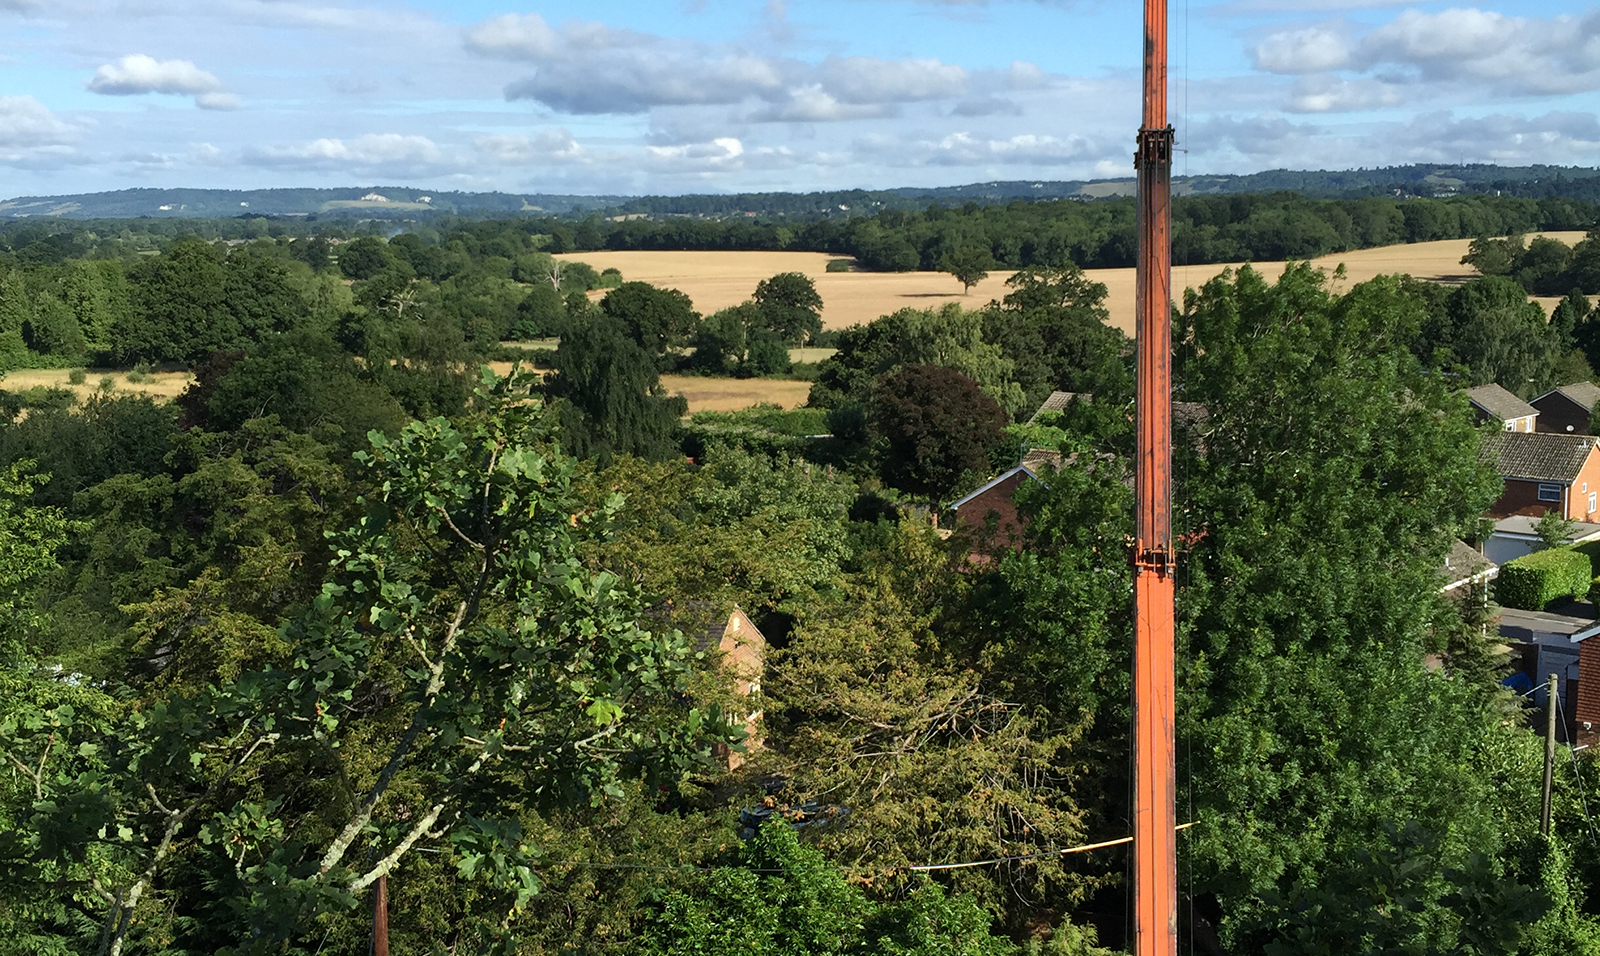 Tree Surgery in Horsham, Surrey with crane